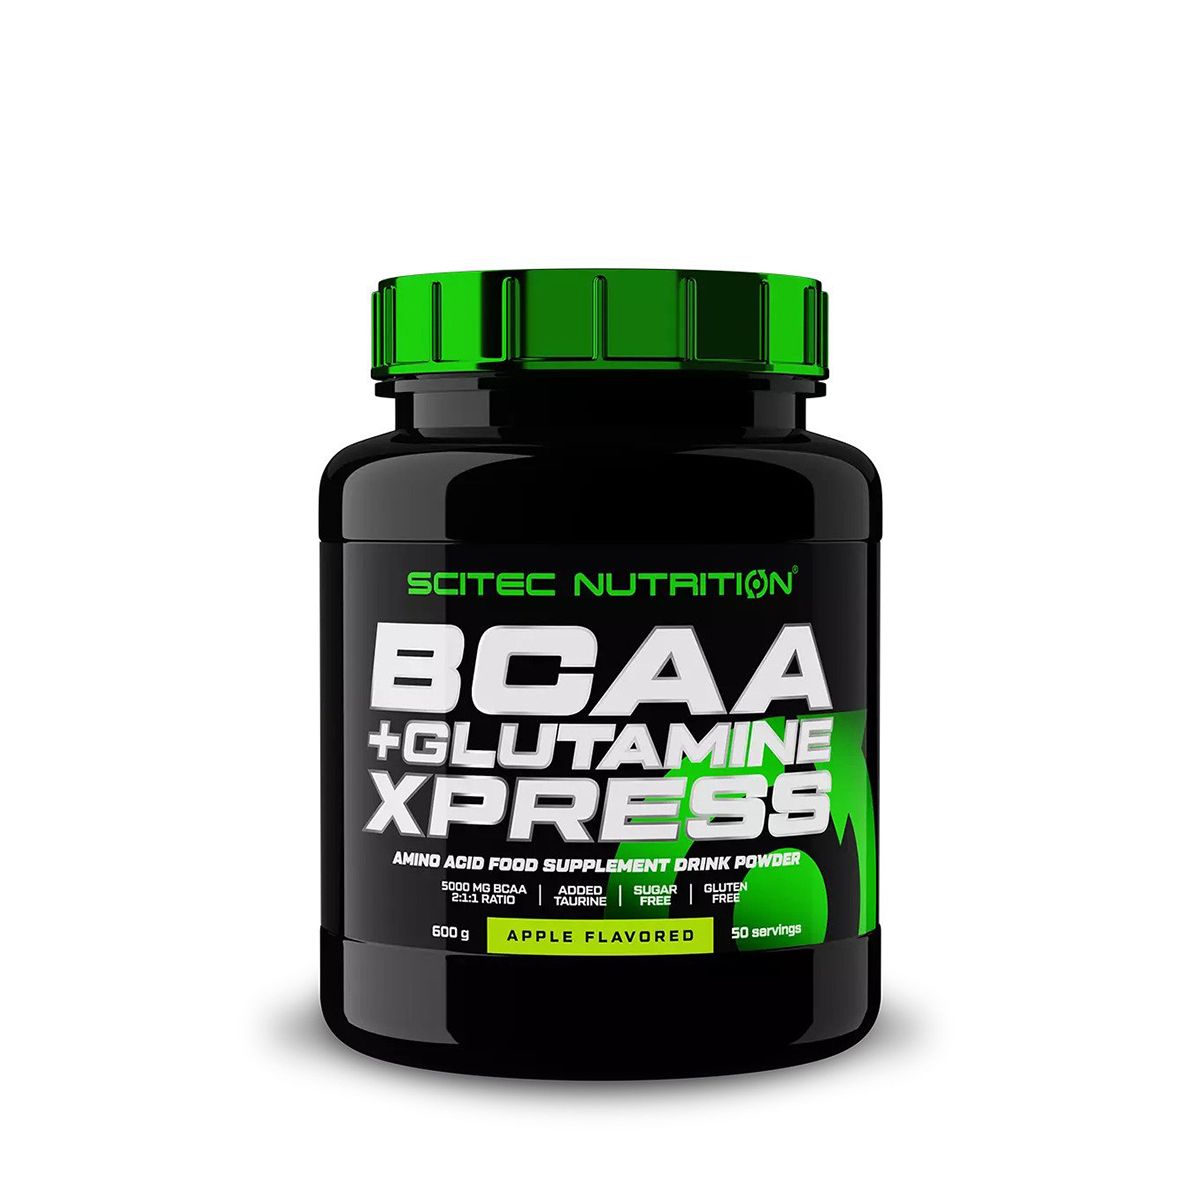 SCITEC NUTRITION - BCAA + GLUTAMINE XPRESS - 600 G